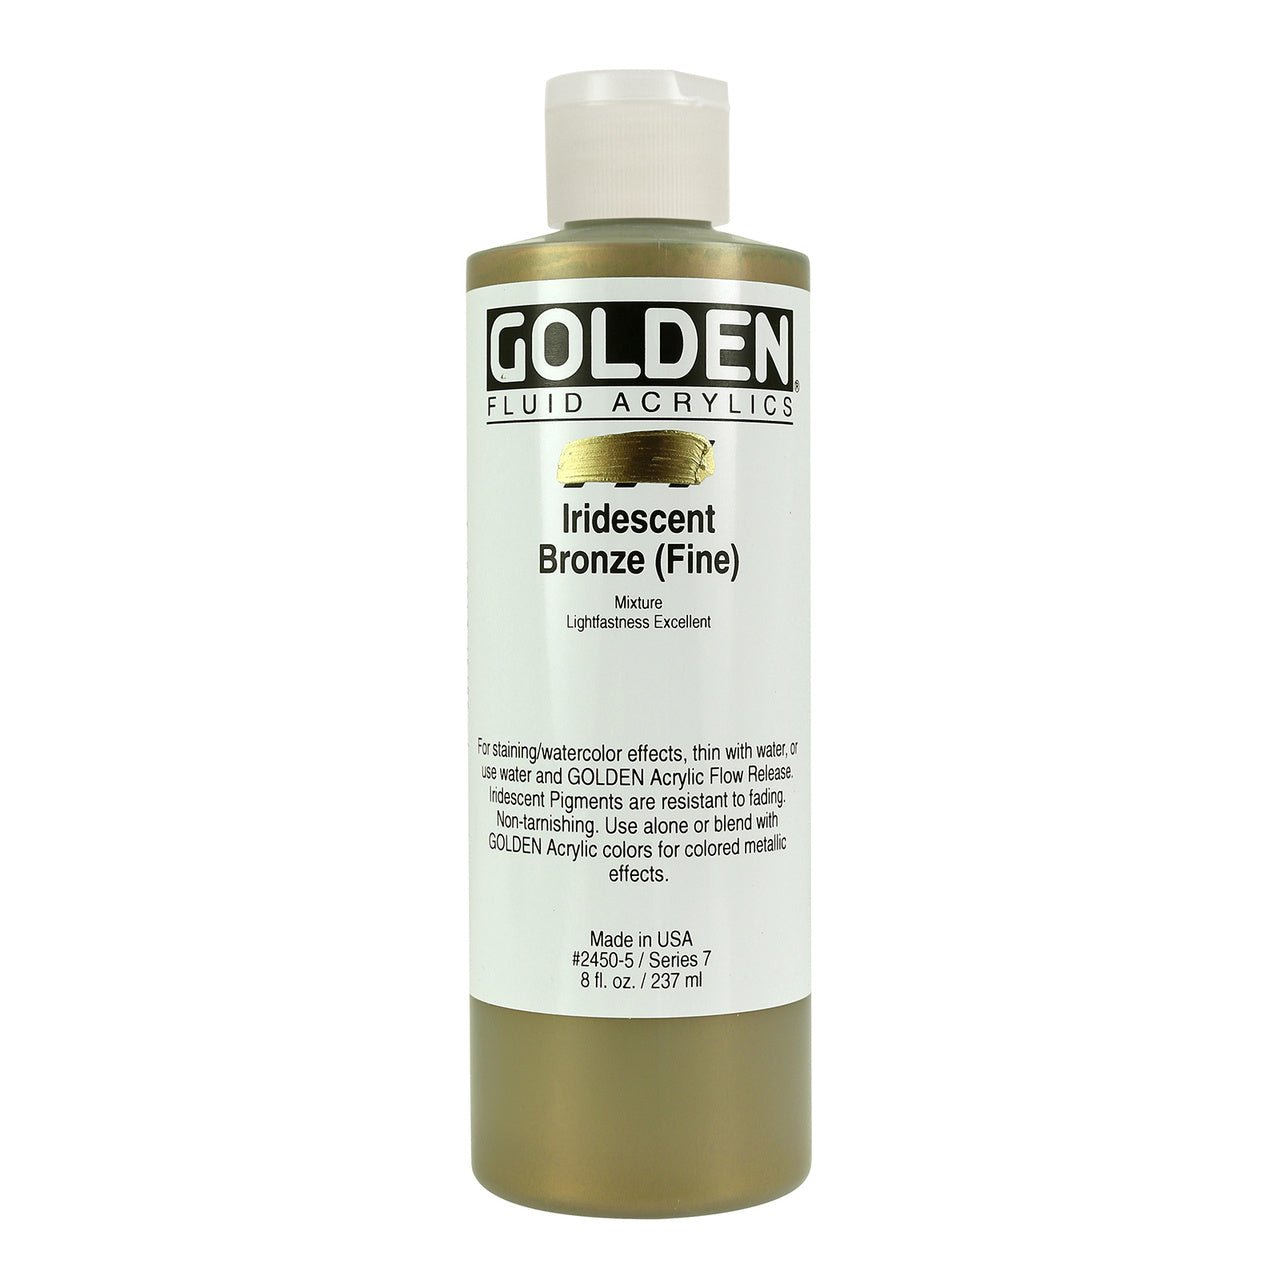 Golden Fluid Acrylic Iridescent Bronze (fine) 8 oz - merriartist.com